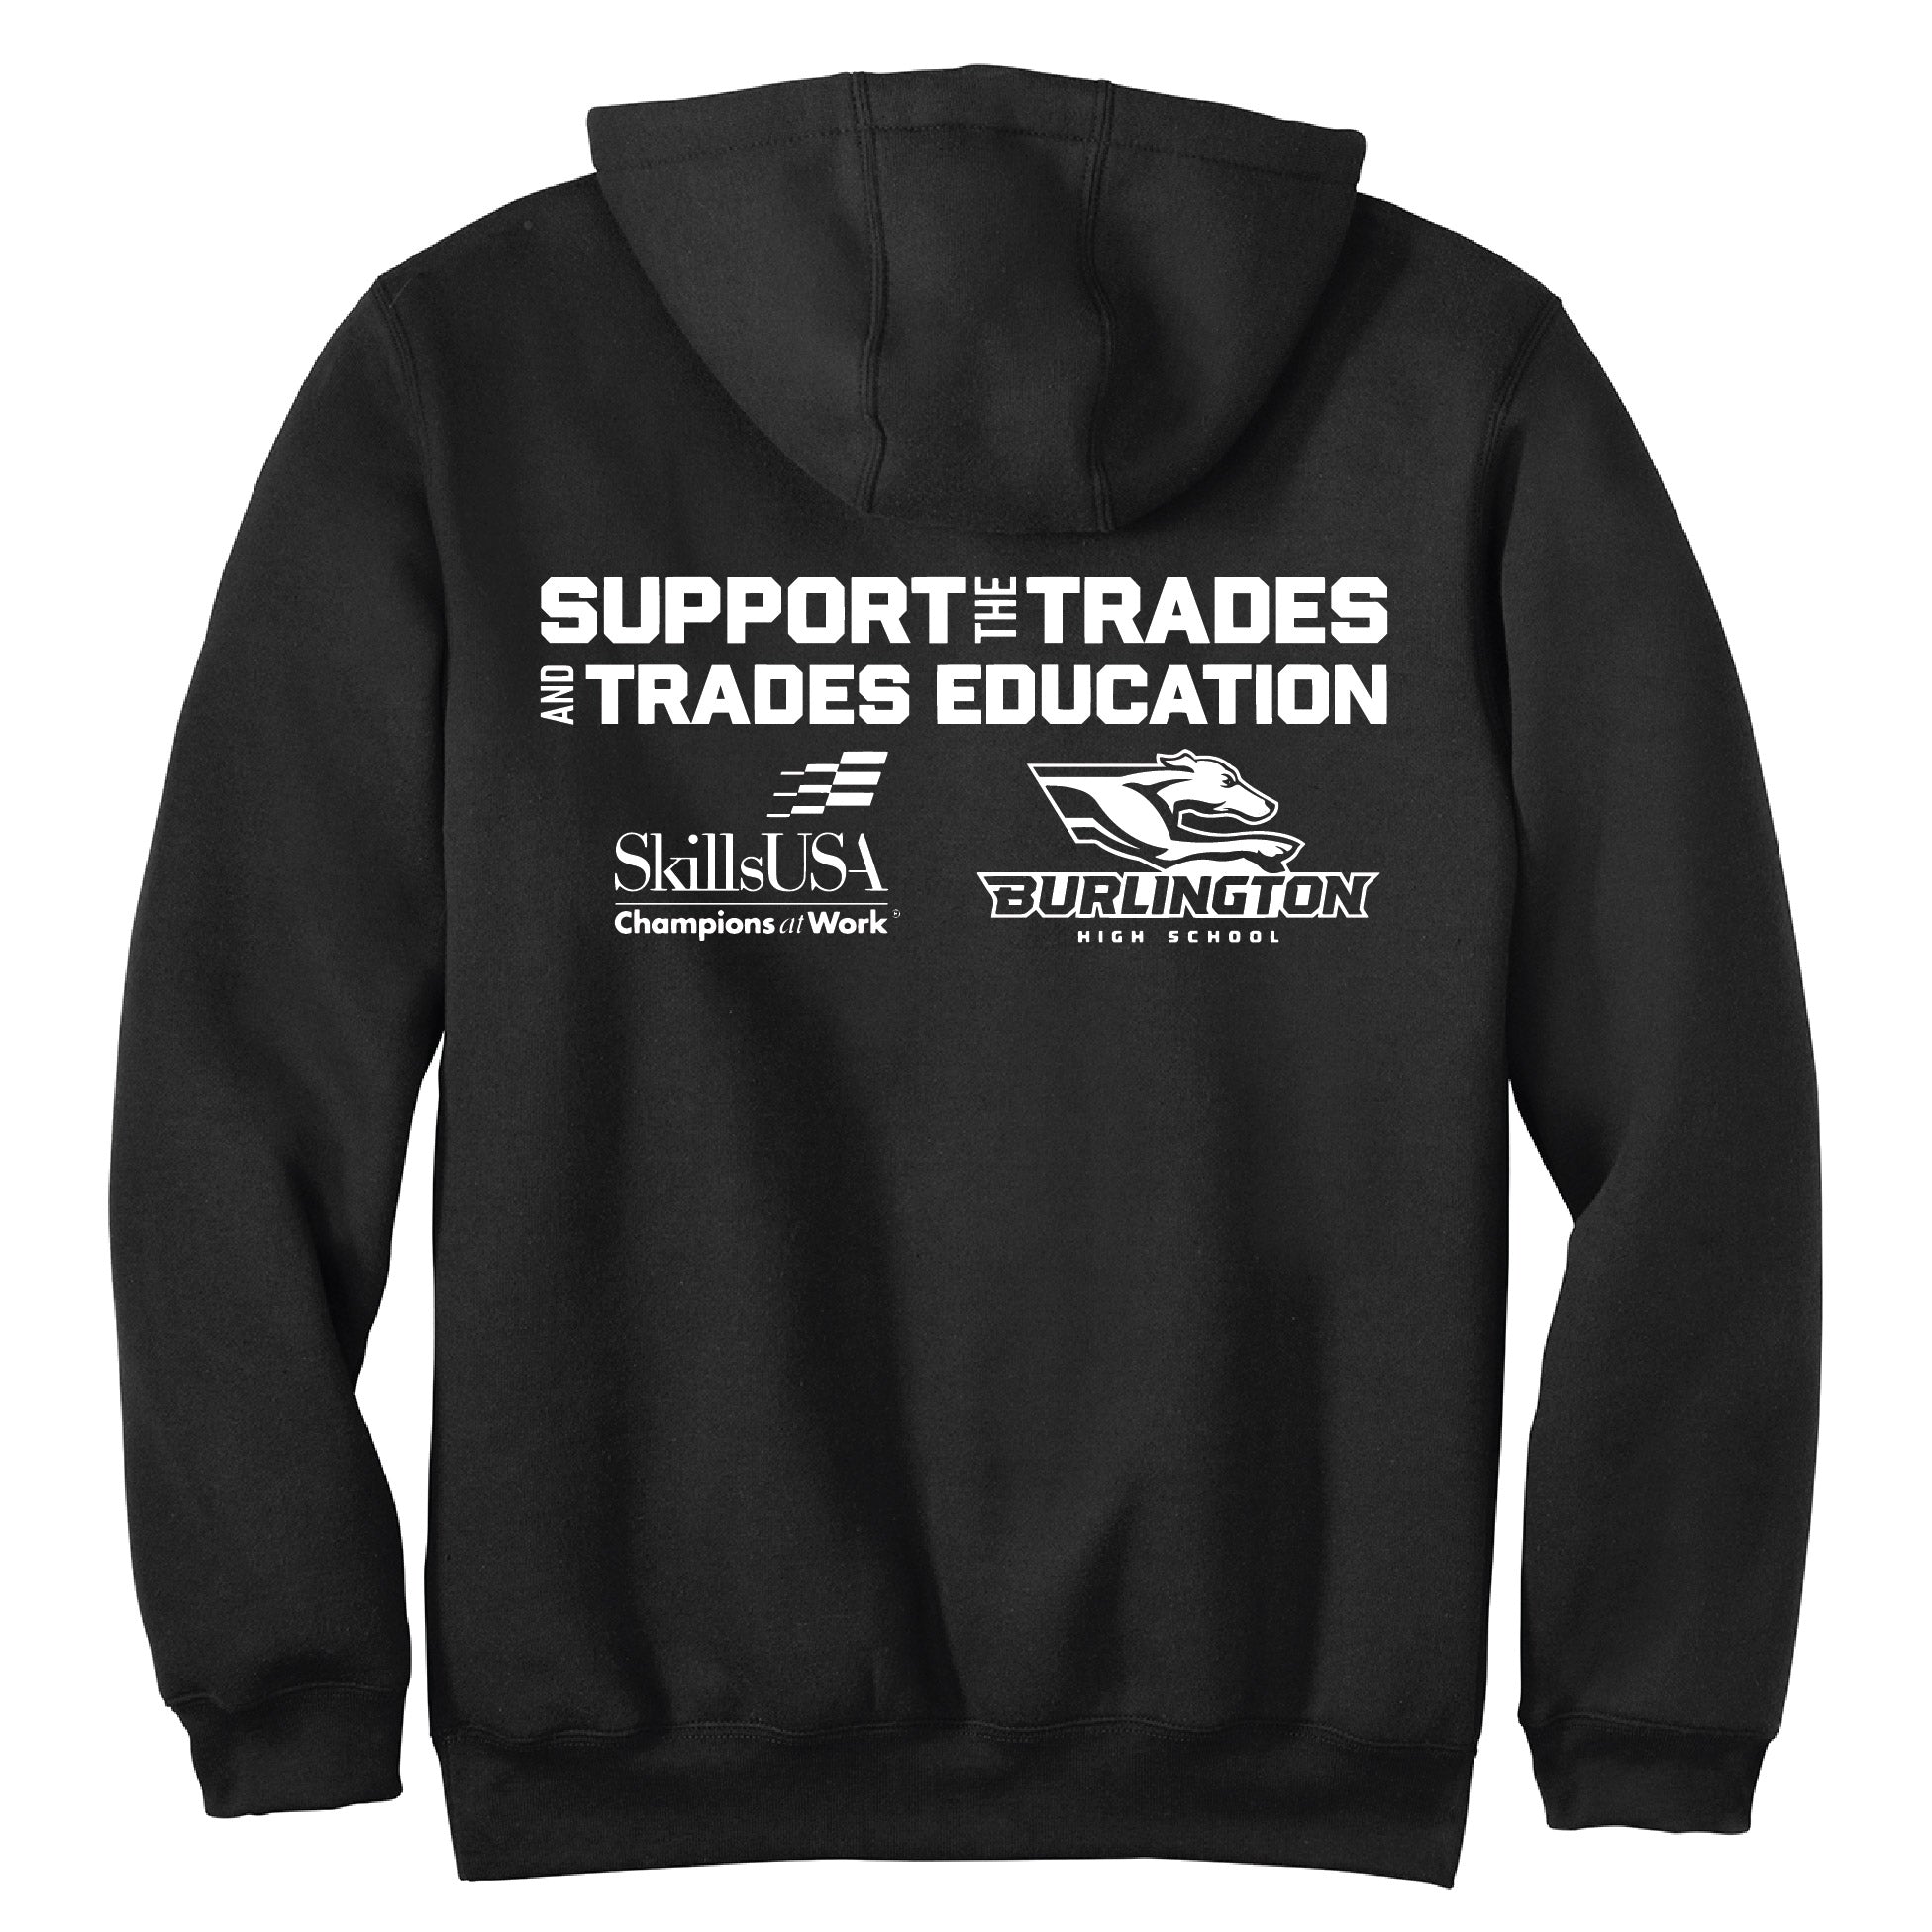 Burlington Support the Trades Carhartt Hood